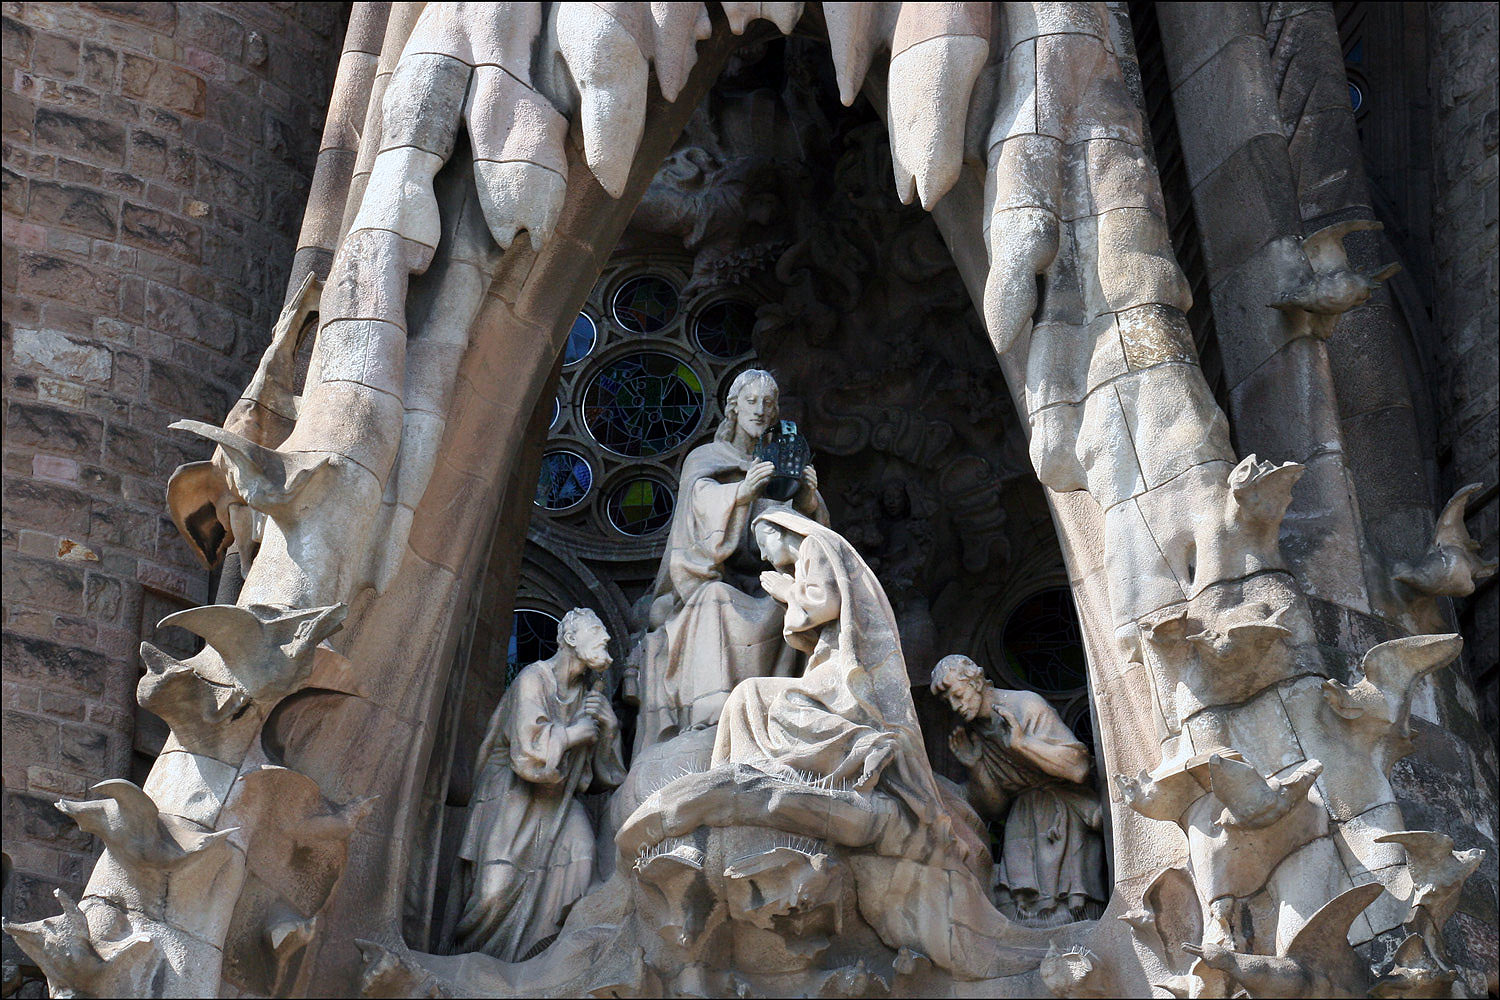 Sagrada Familia by Gaudi - Basilica in Barcelona, Spain - 137 Year Project 22